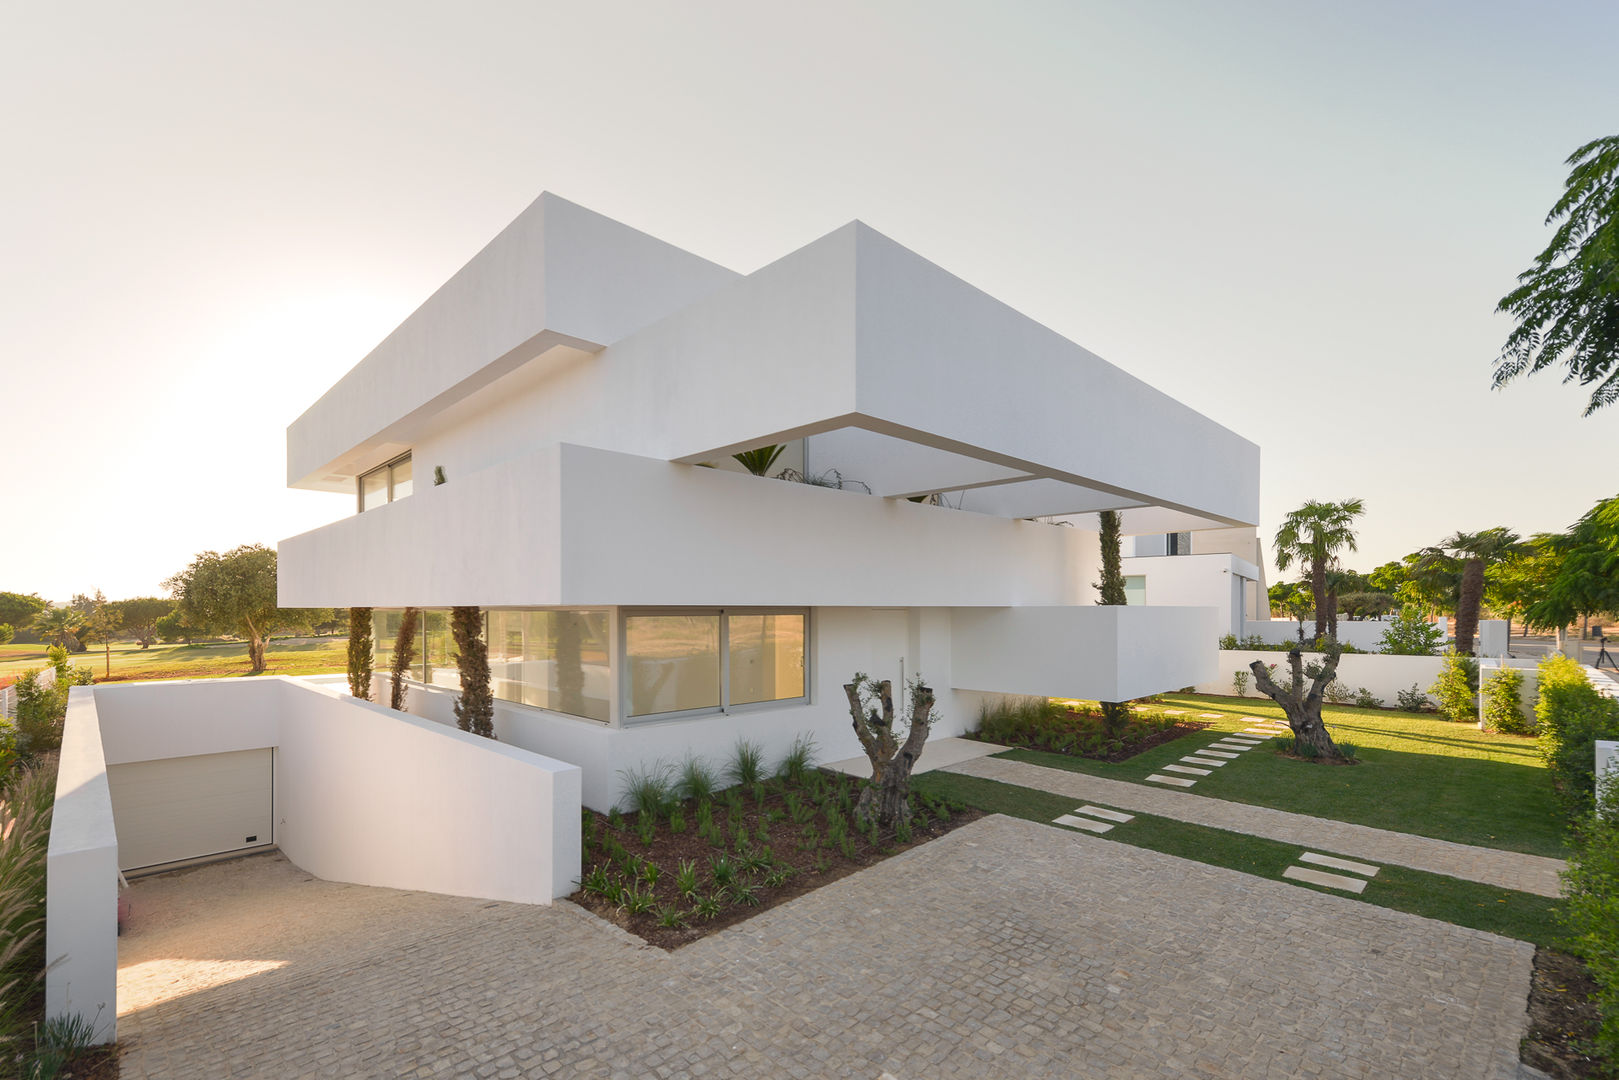 Casa de arquitectura volumétrica no Algarve tem 5 terraços e um jardim, Corpo Atelier Corpo Atelier Nowoczesne domy